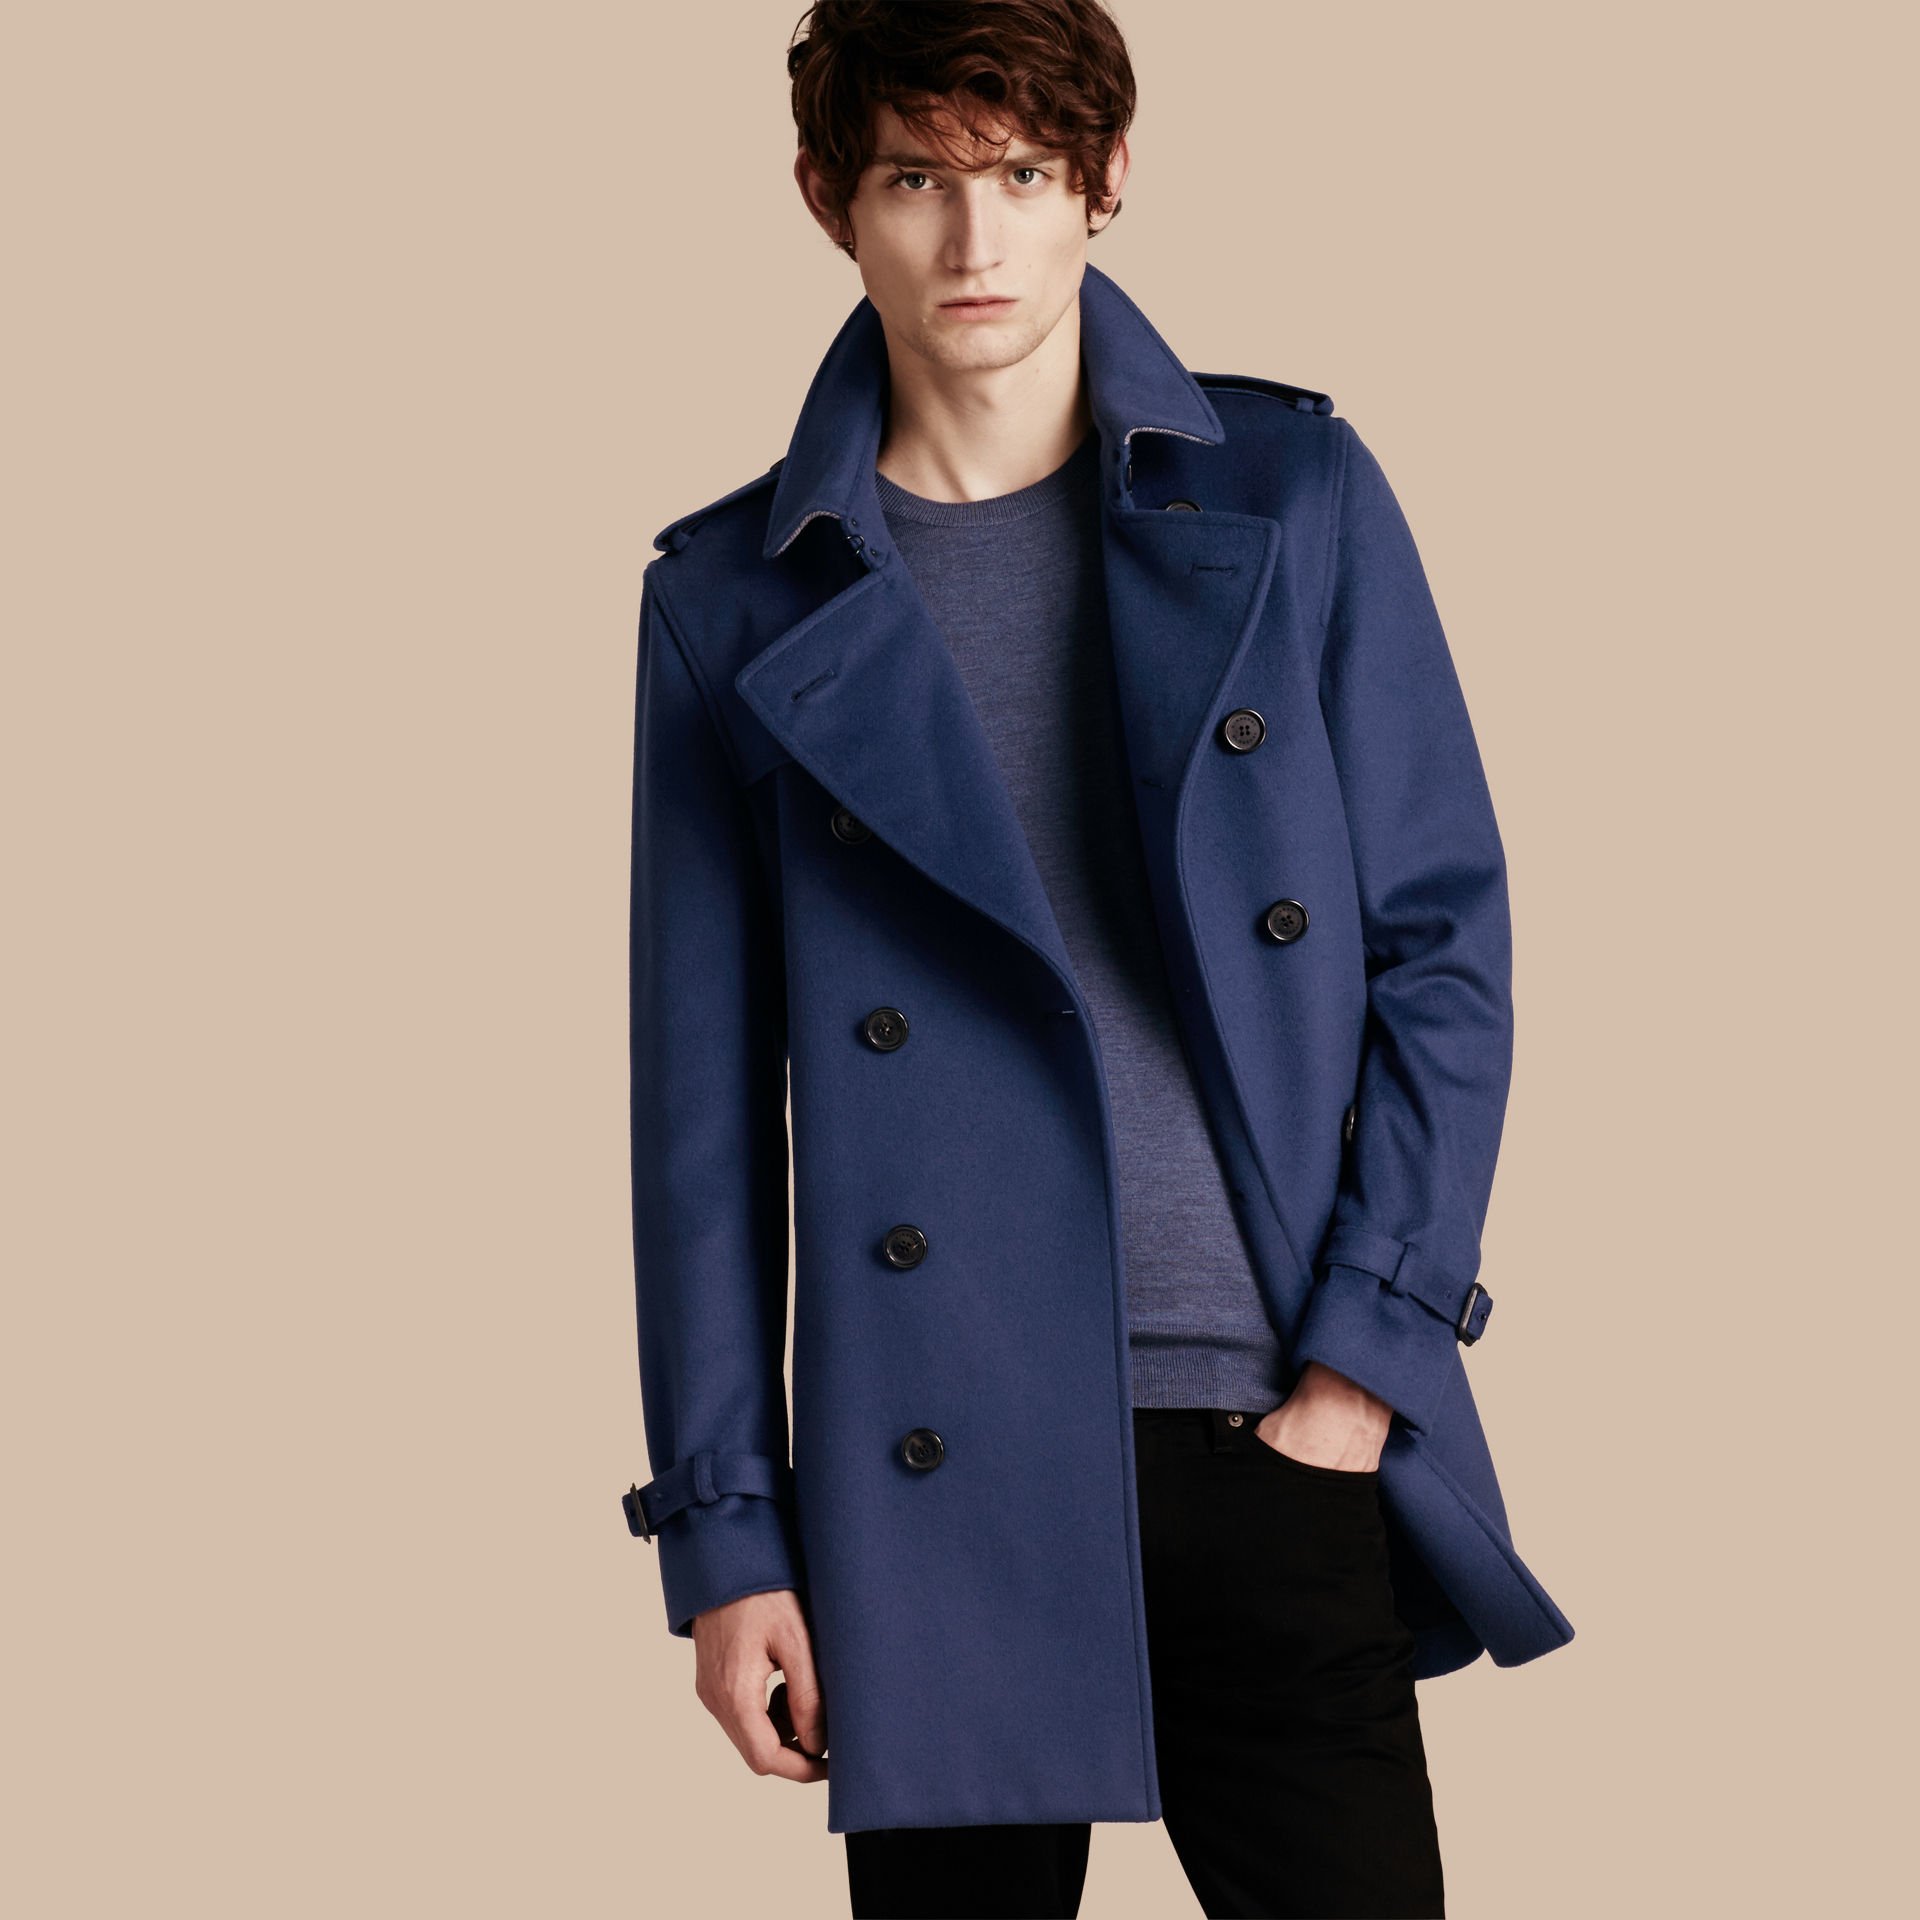 Blue Wool Coat Mens Store, SAVE 49% - stmichaelgirard.com